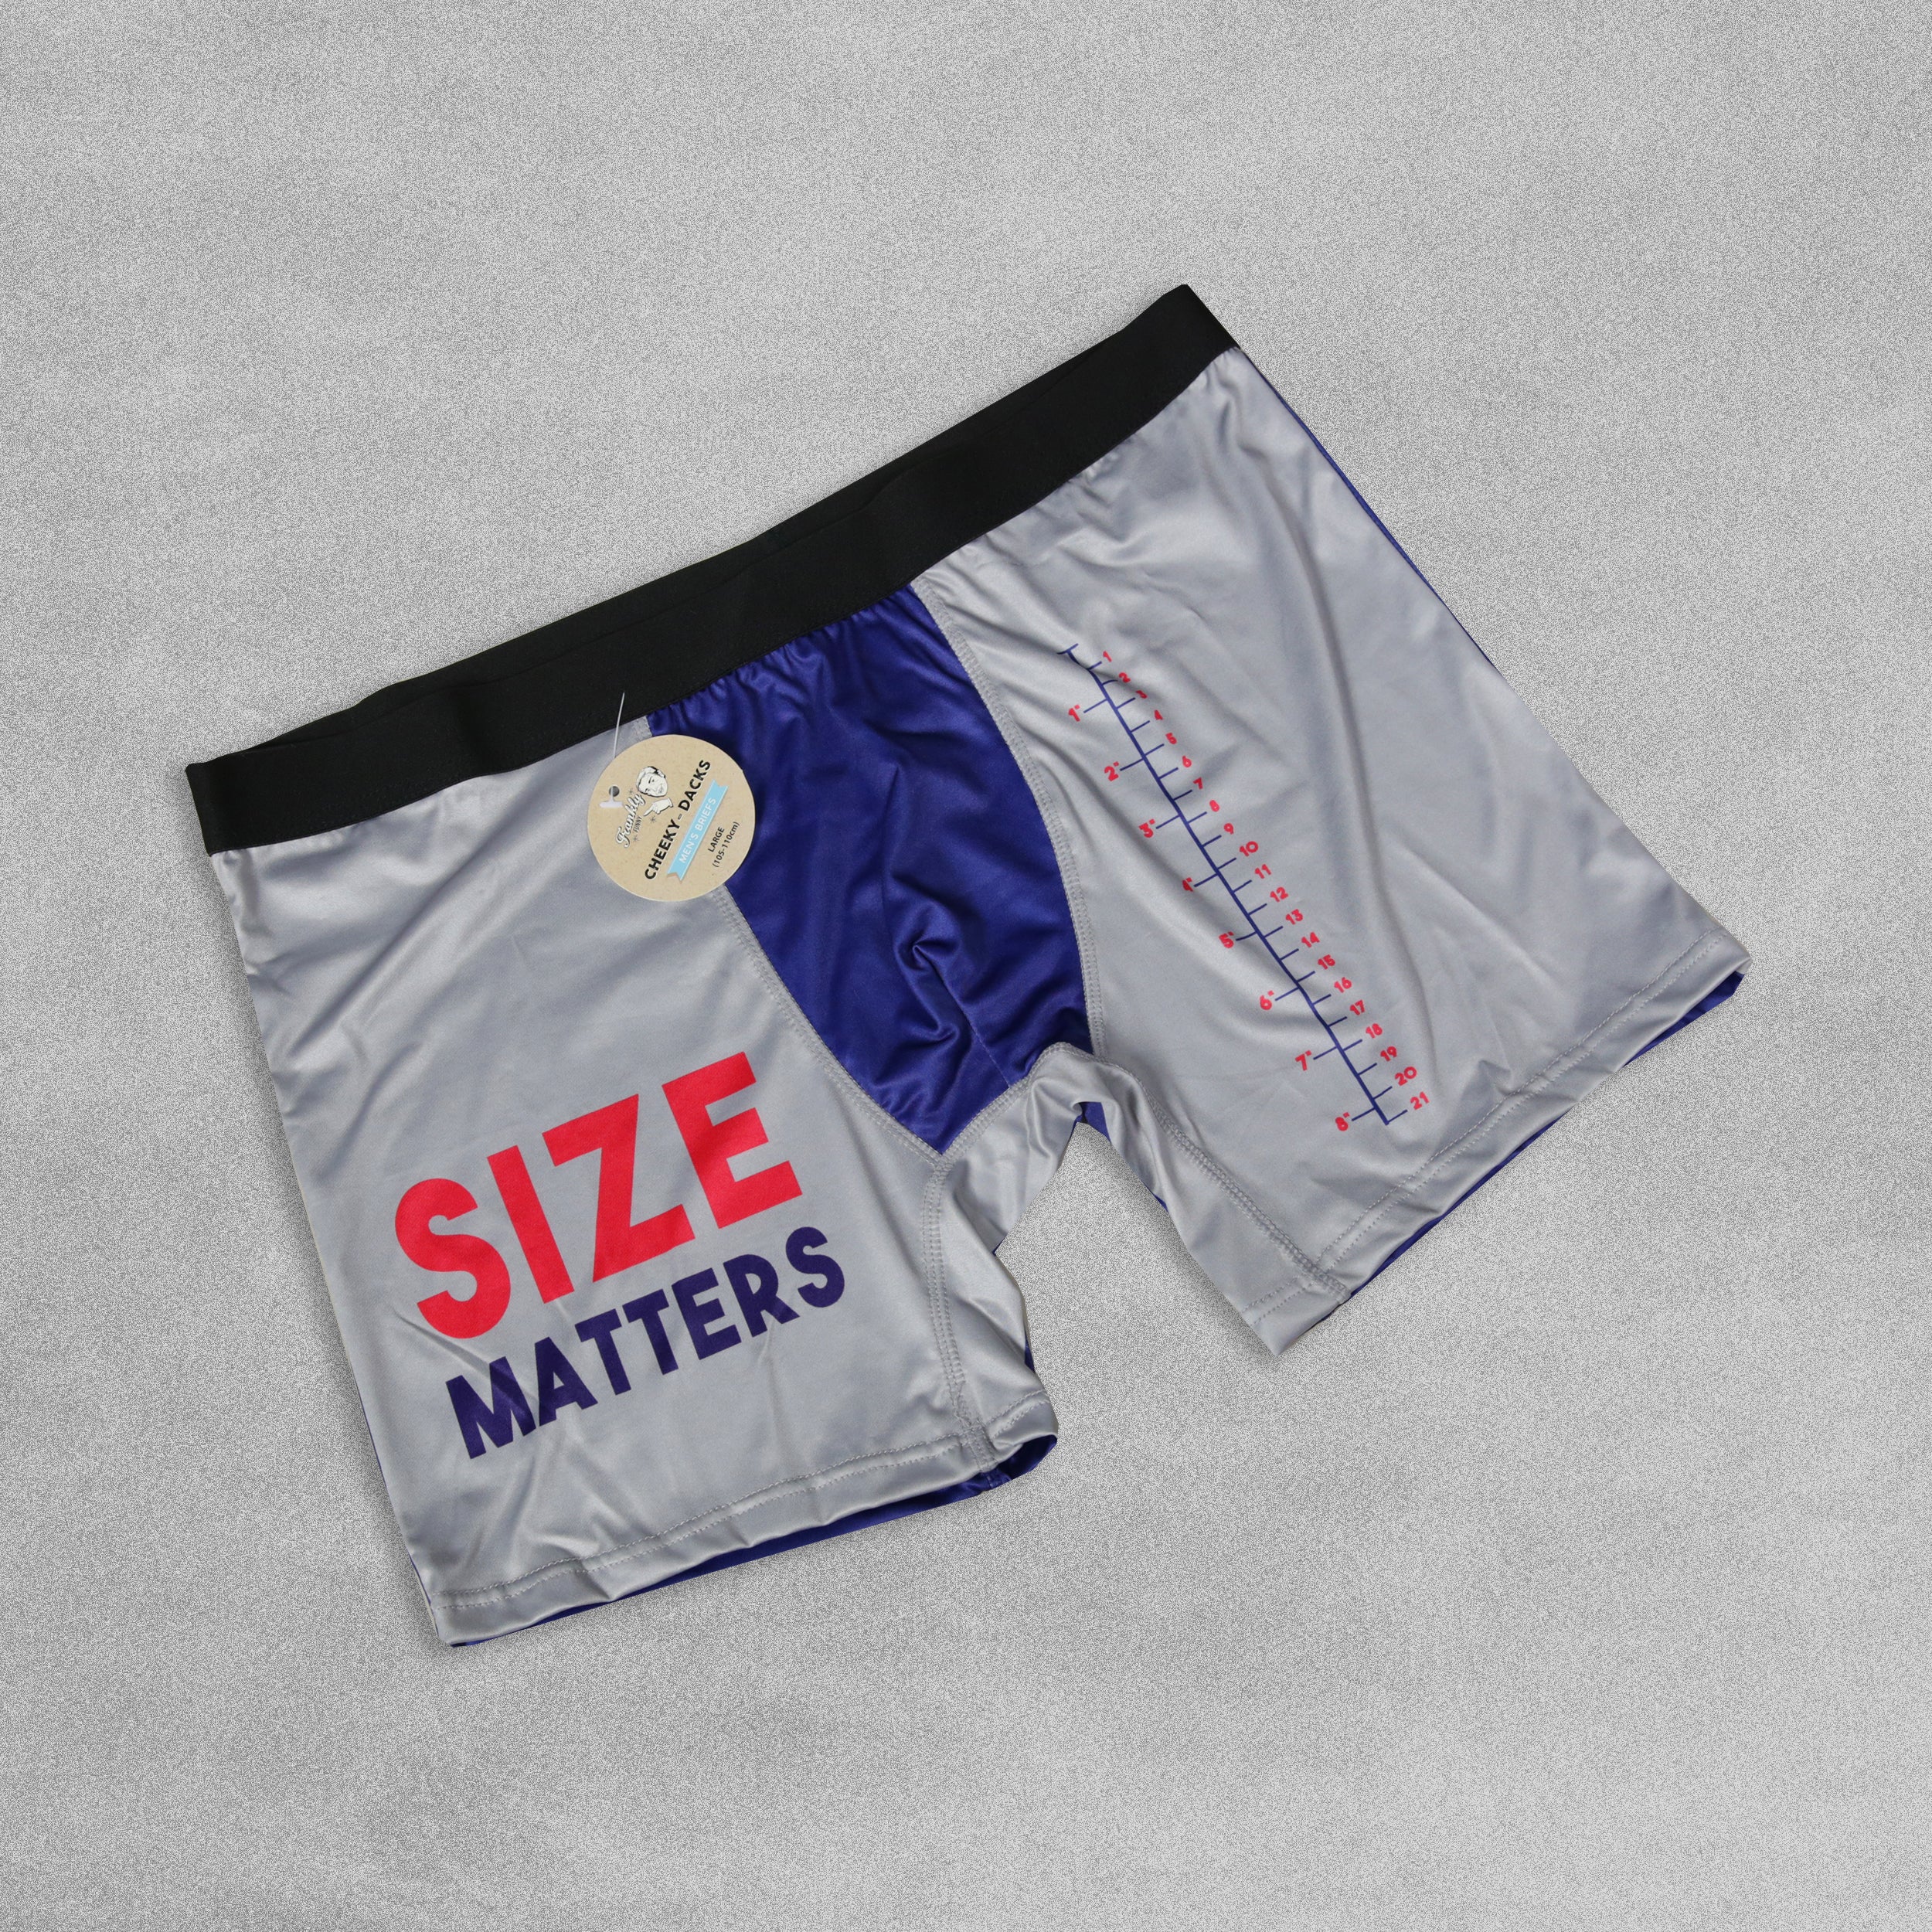 Mens Novelty Boxer Shorts - Size Matters!